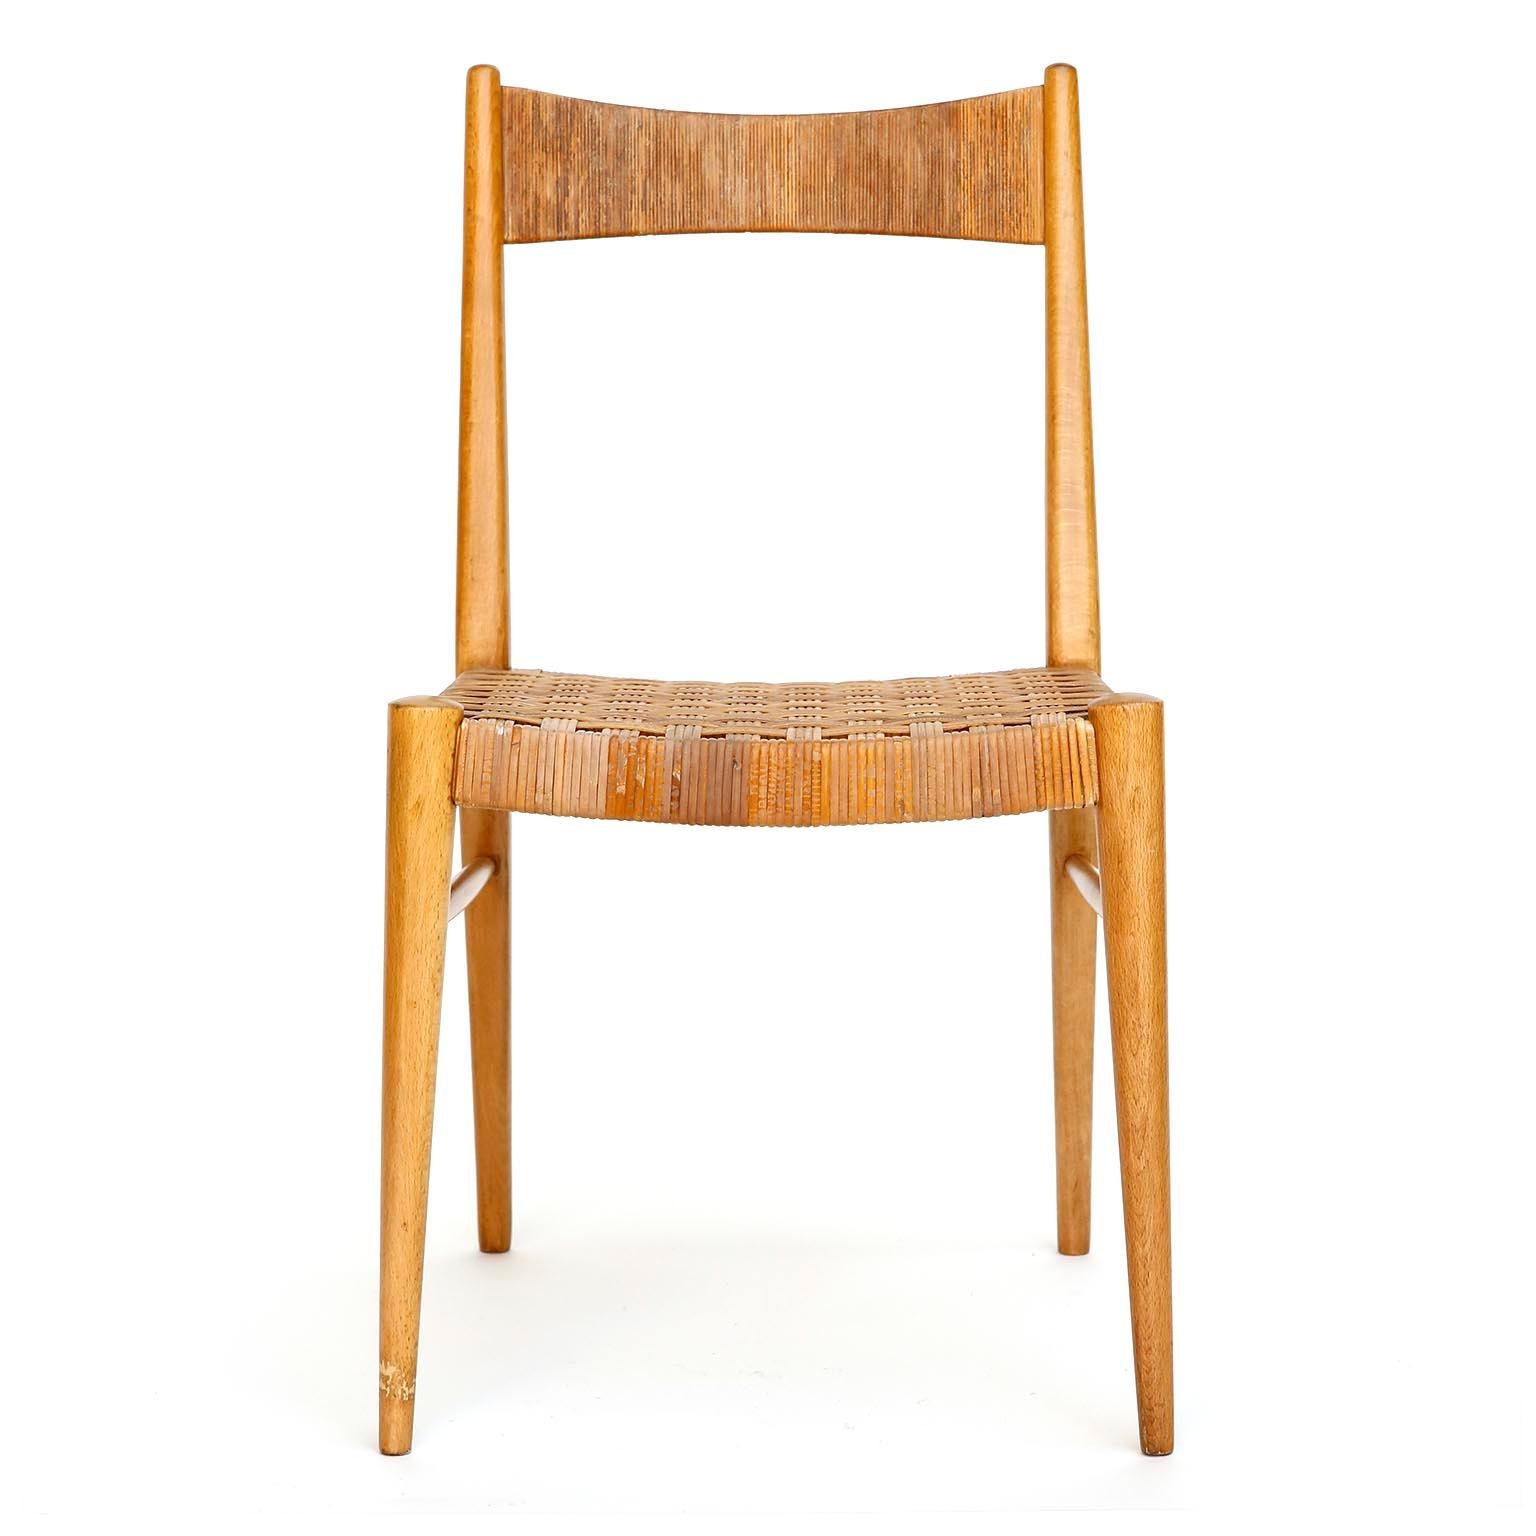 Mid-Century Modern Four Anna-Lülja Praun Chairs, Wood Wicker Cane, 1950s For Sale